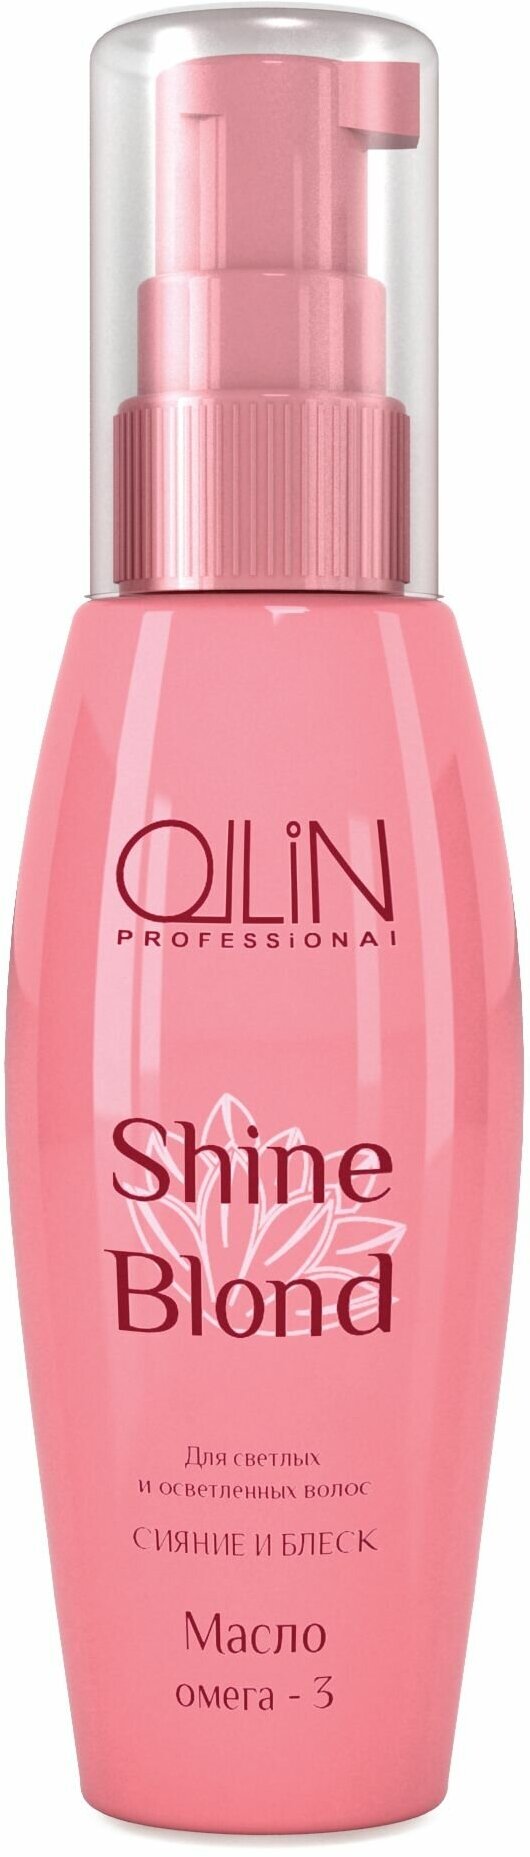 Масло для волос Ollin Professional Shine Blond Масло ОМЕГА-3 50мл